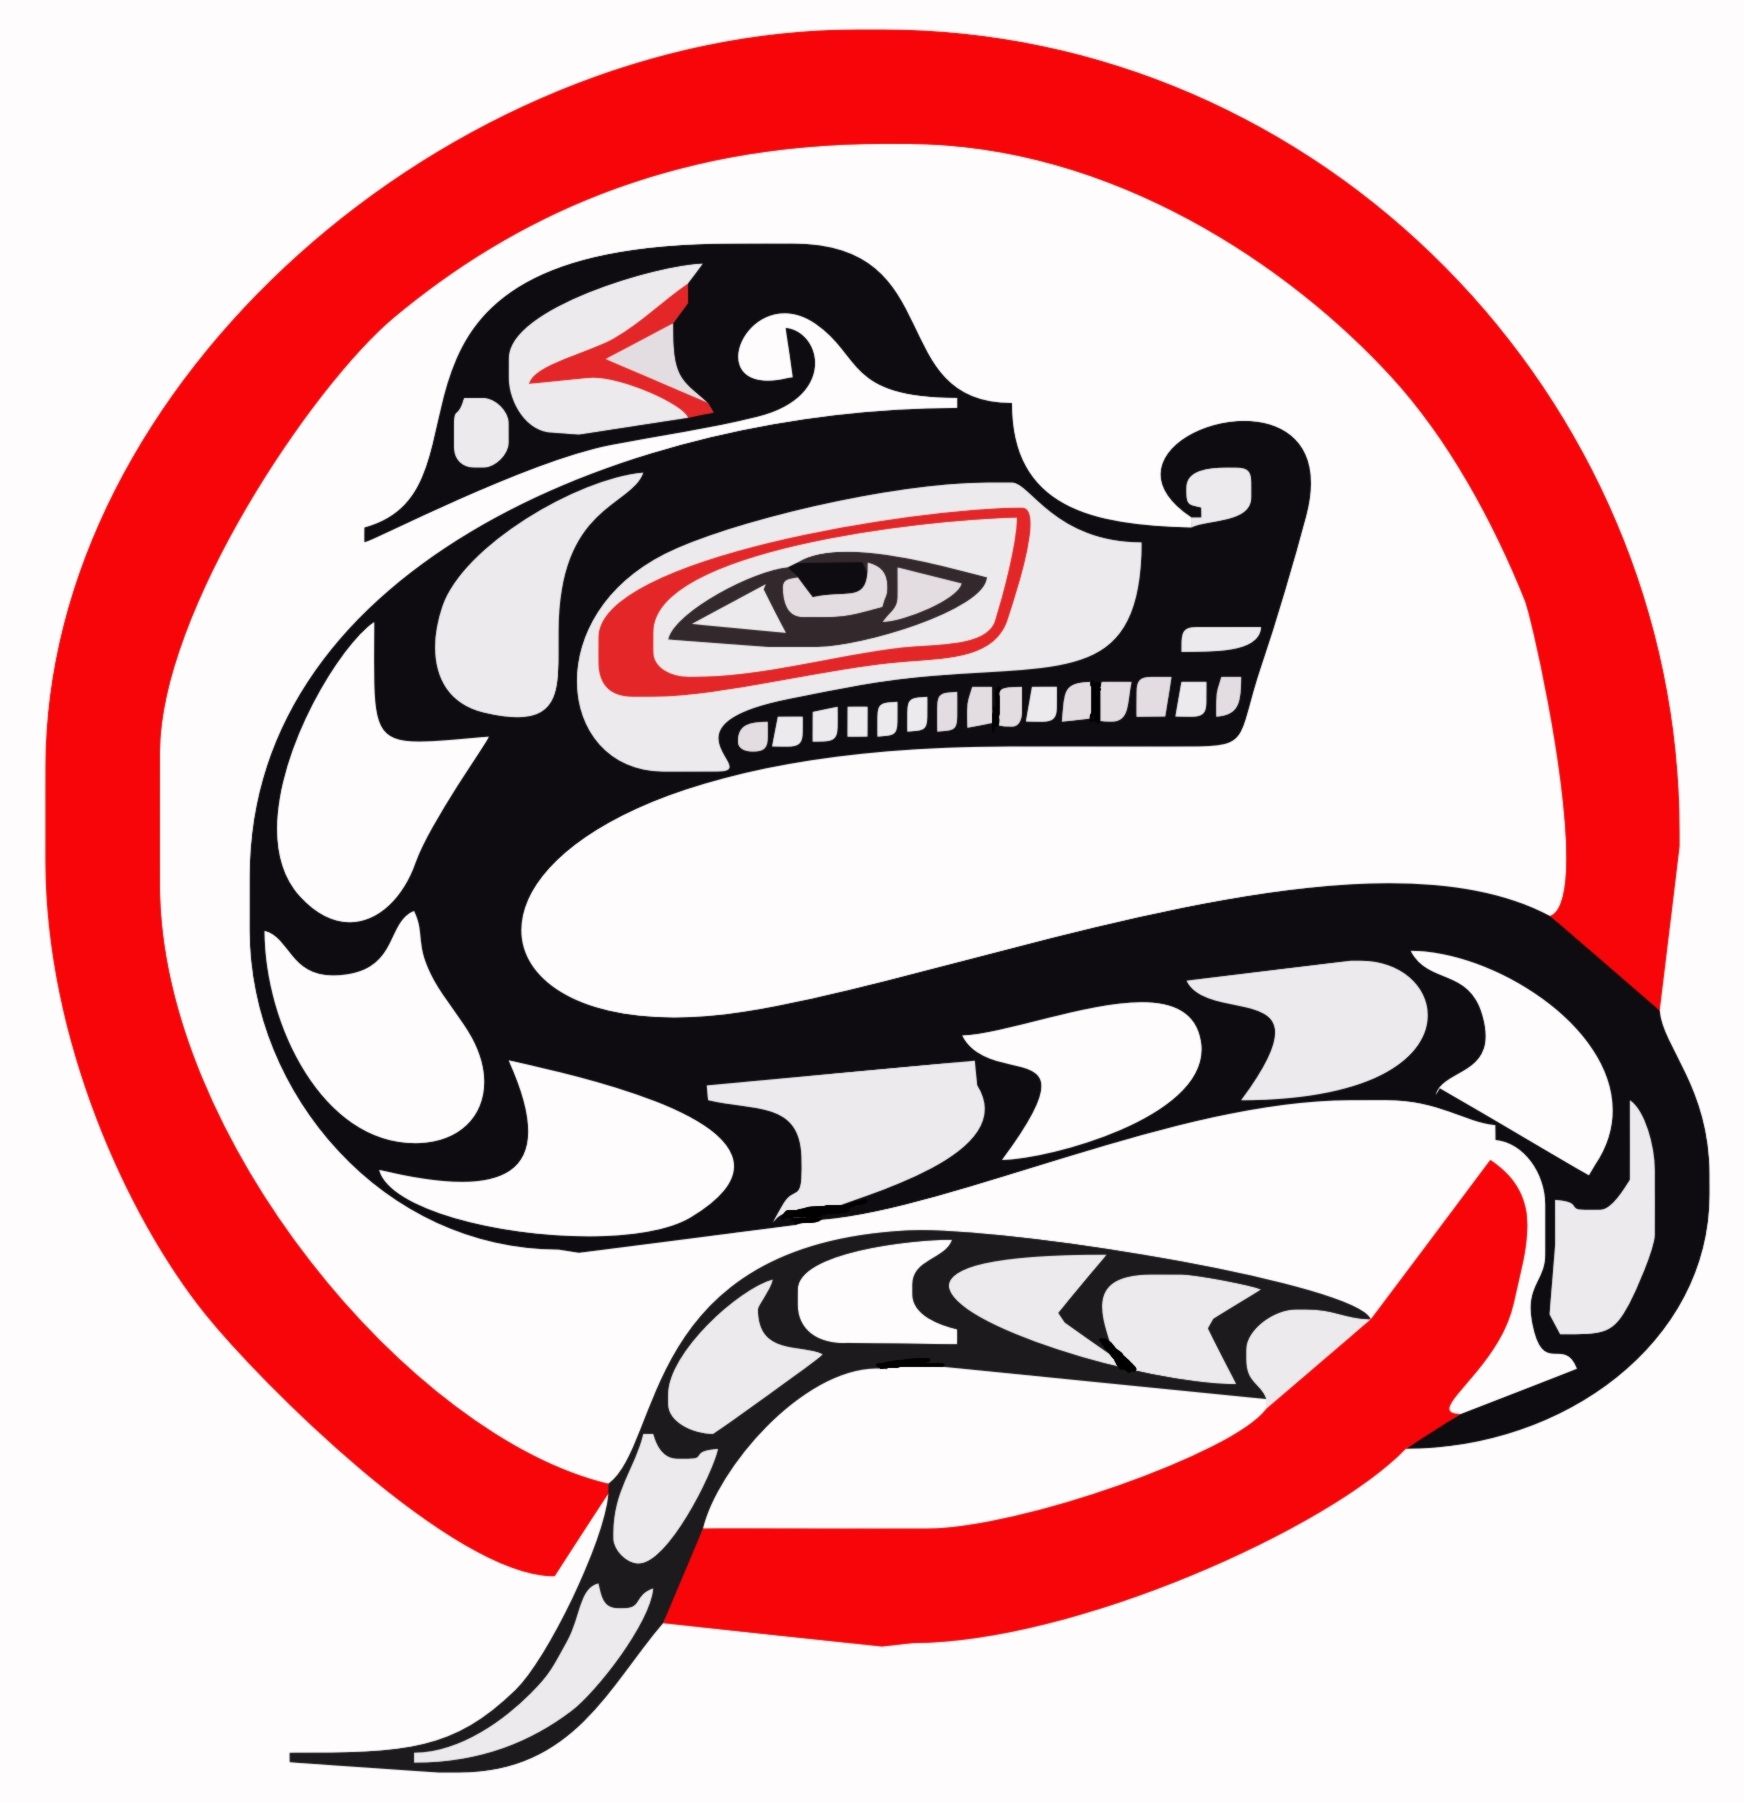 Tla-o-qui-aht First Nation Economic Development Master Limited Partnership Logo